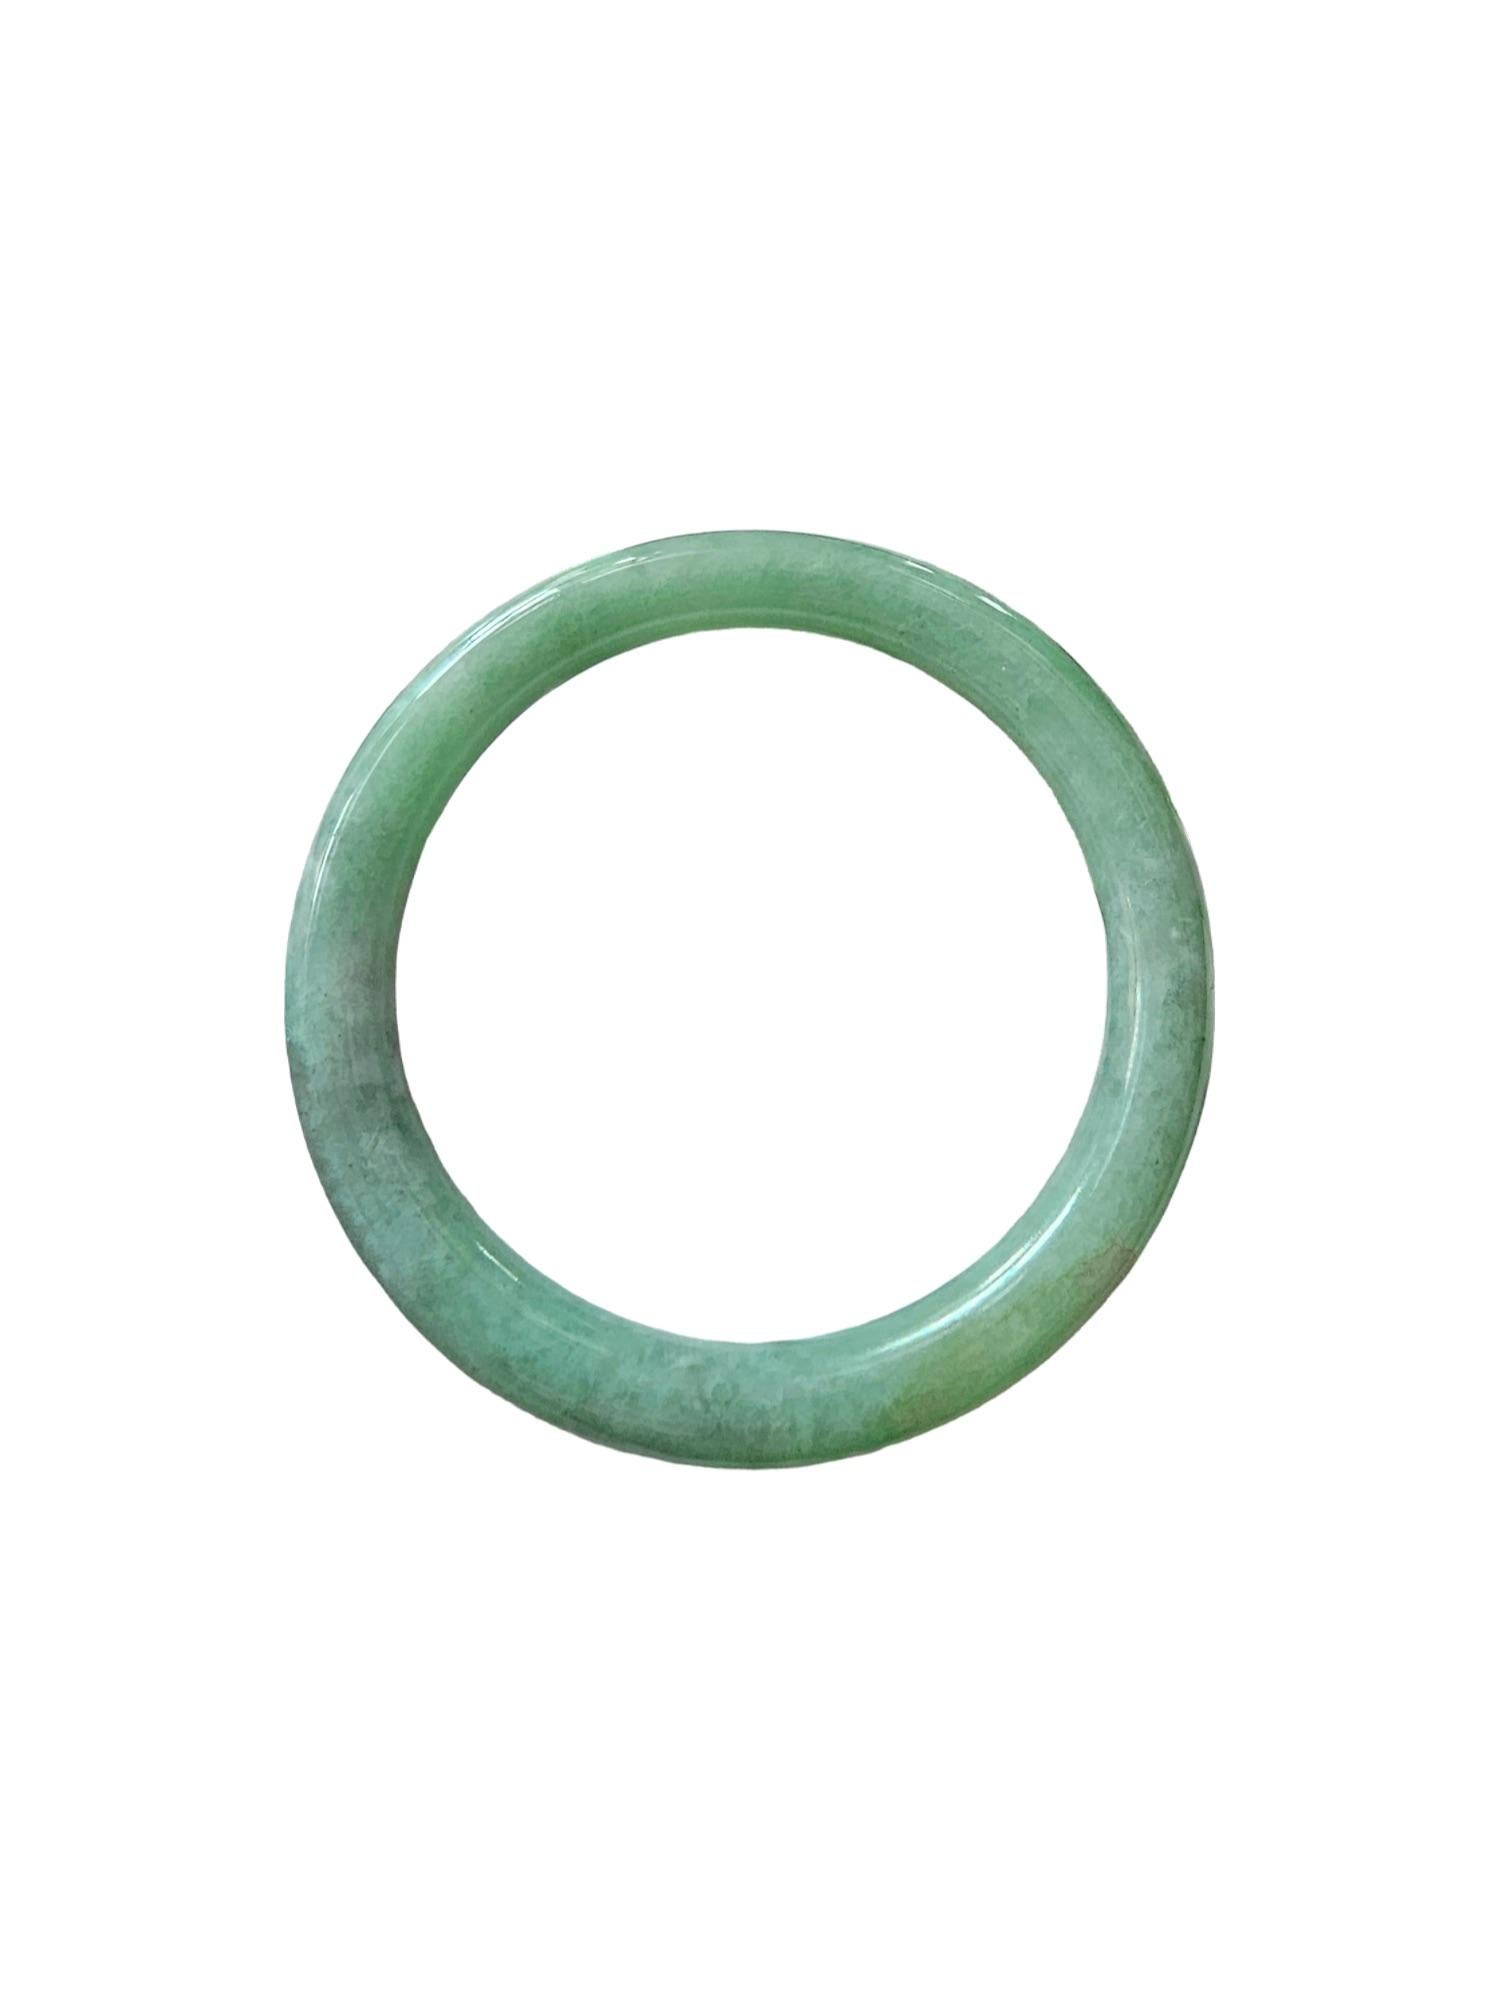 Earth's Burmese A-Jade Bangle Bracelet Green Jadeite 08809 For Sale 3